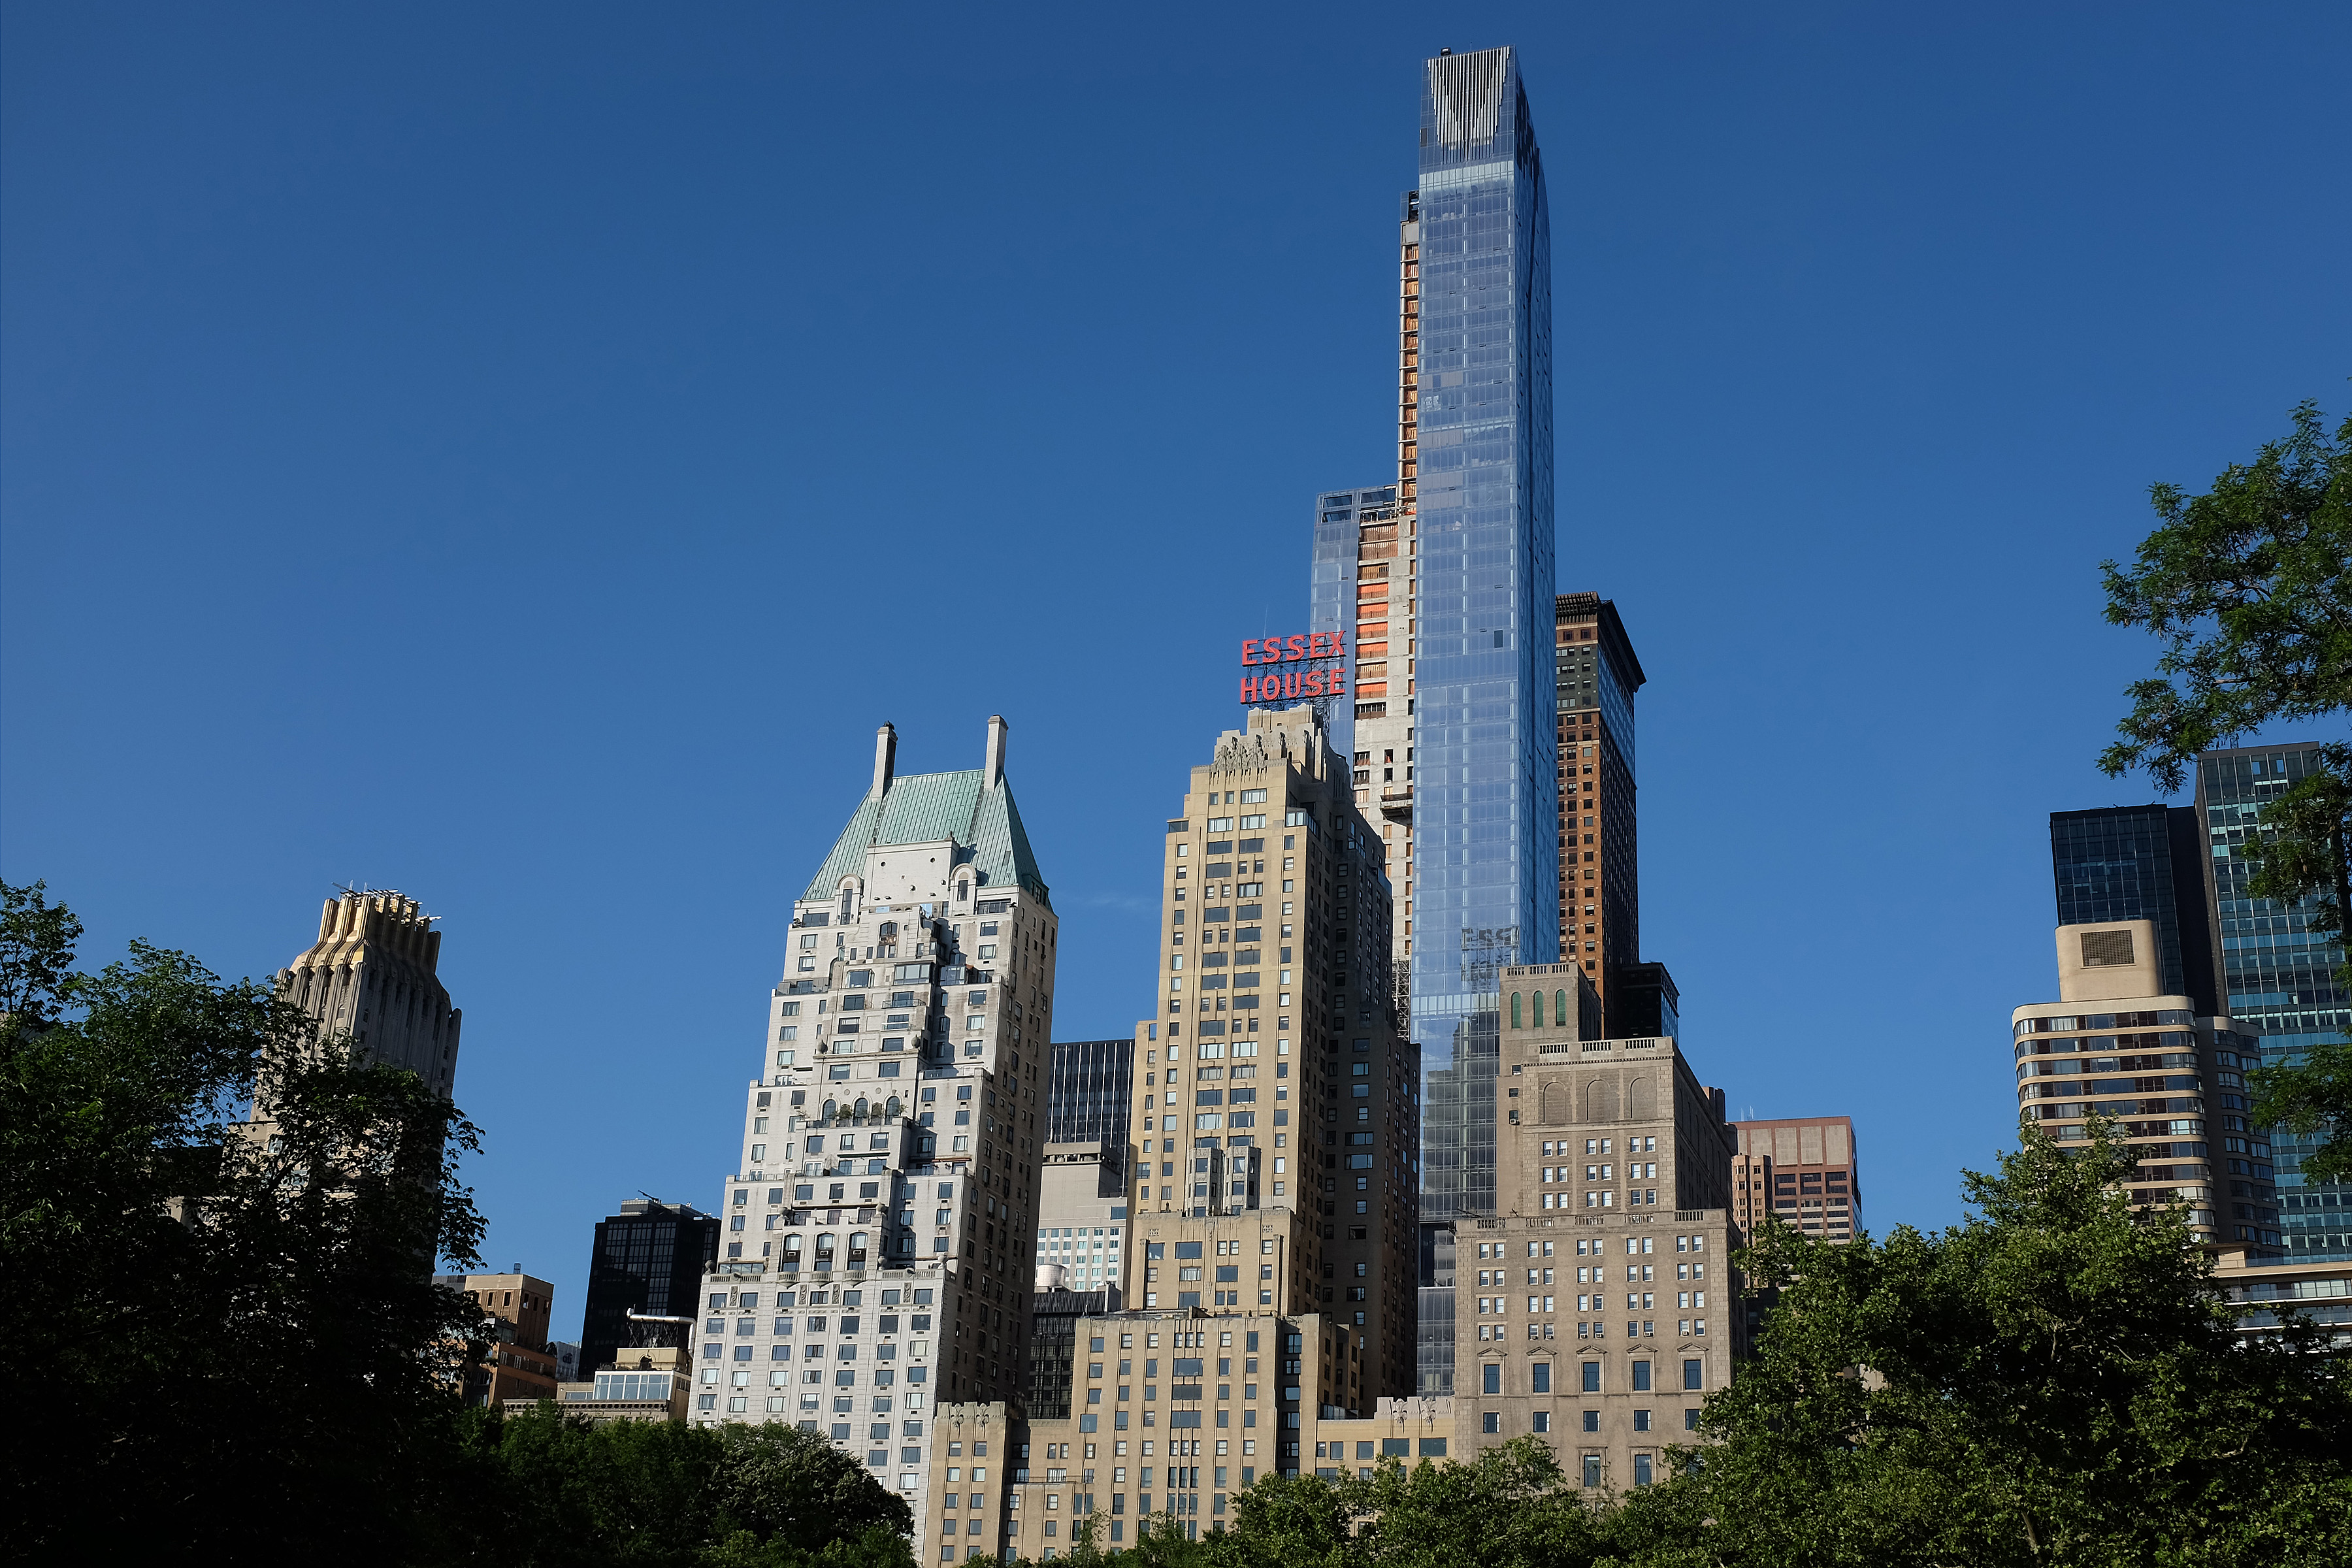 New York City skyline (5th Avenue) from Central Park